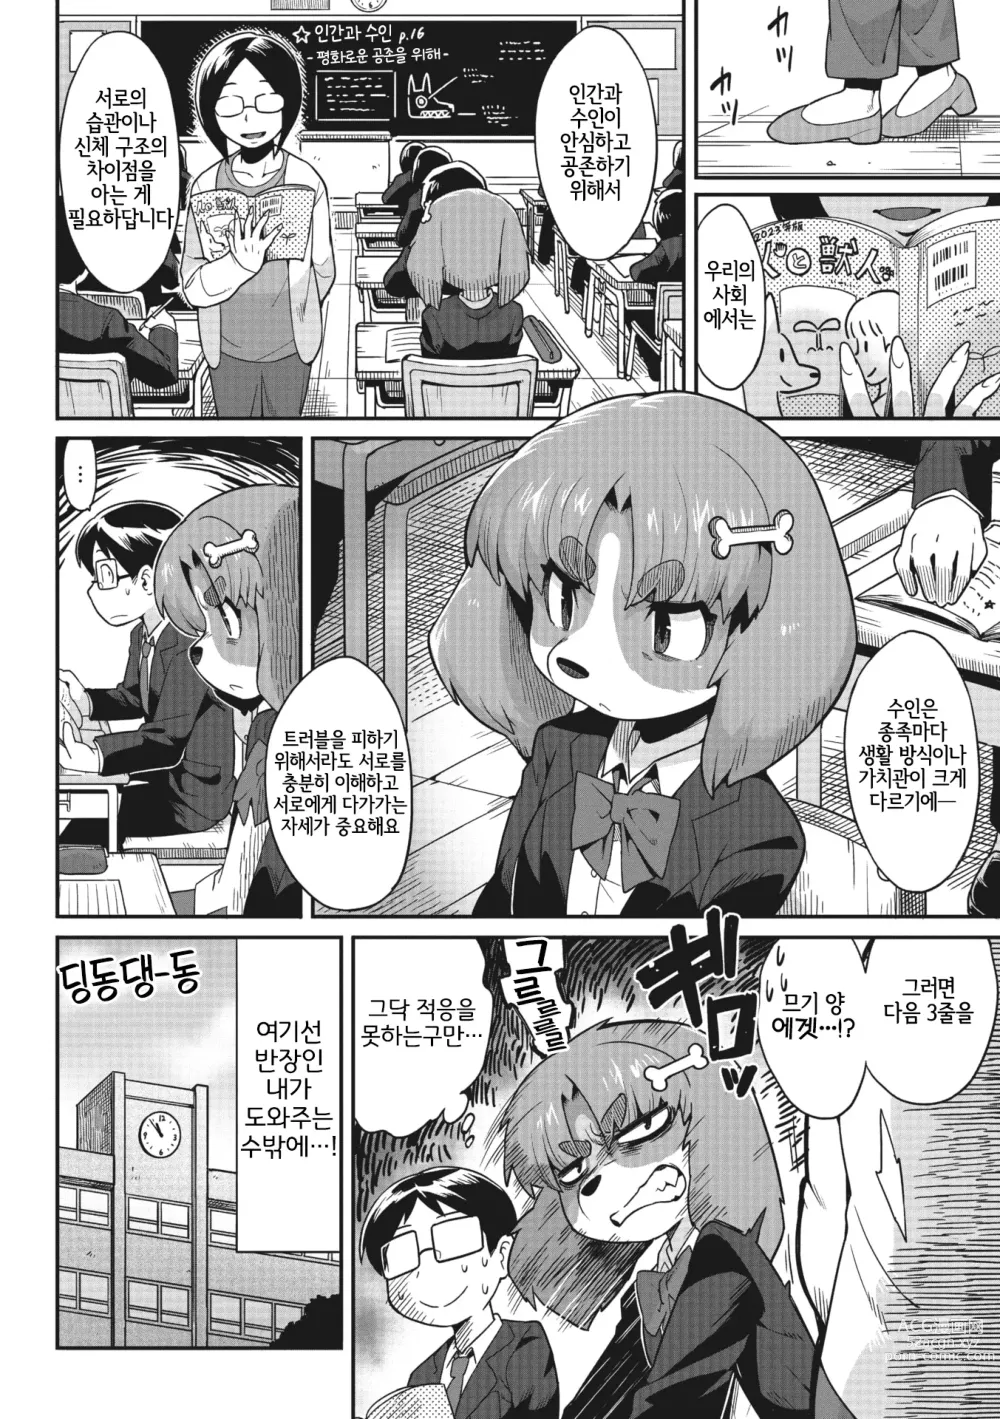 Page 2 of manga  주인님!!